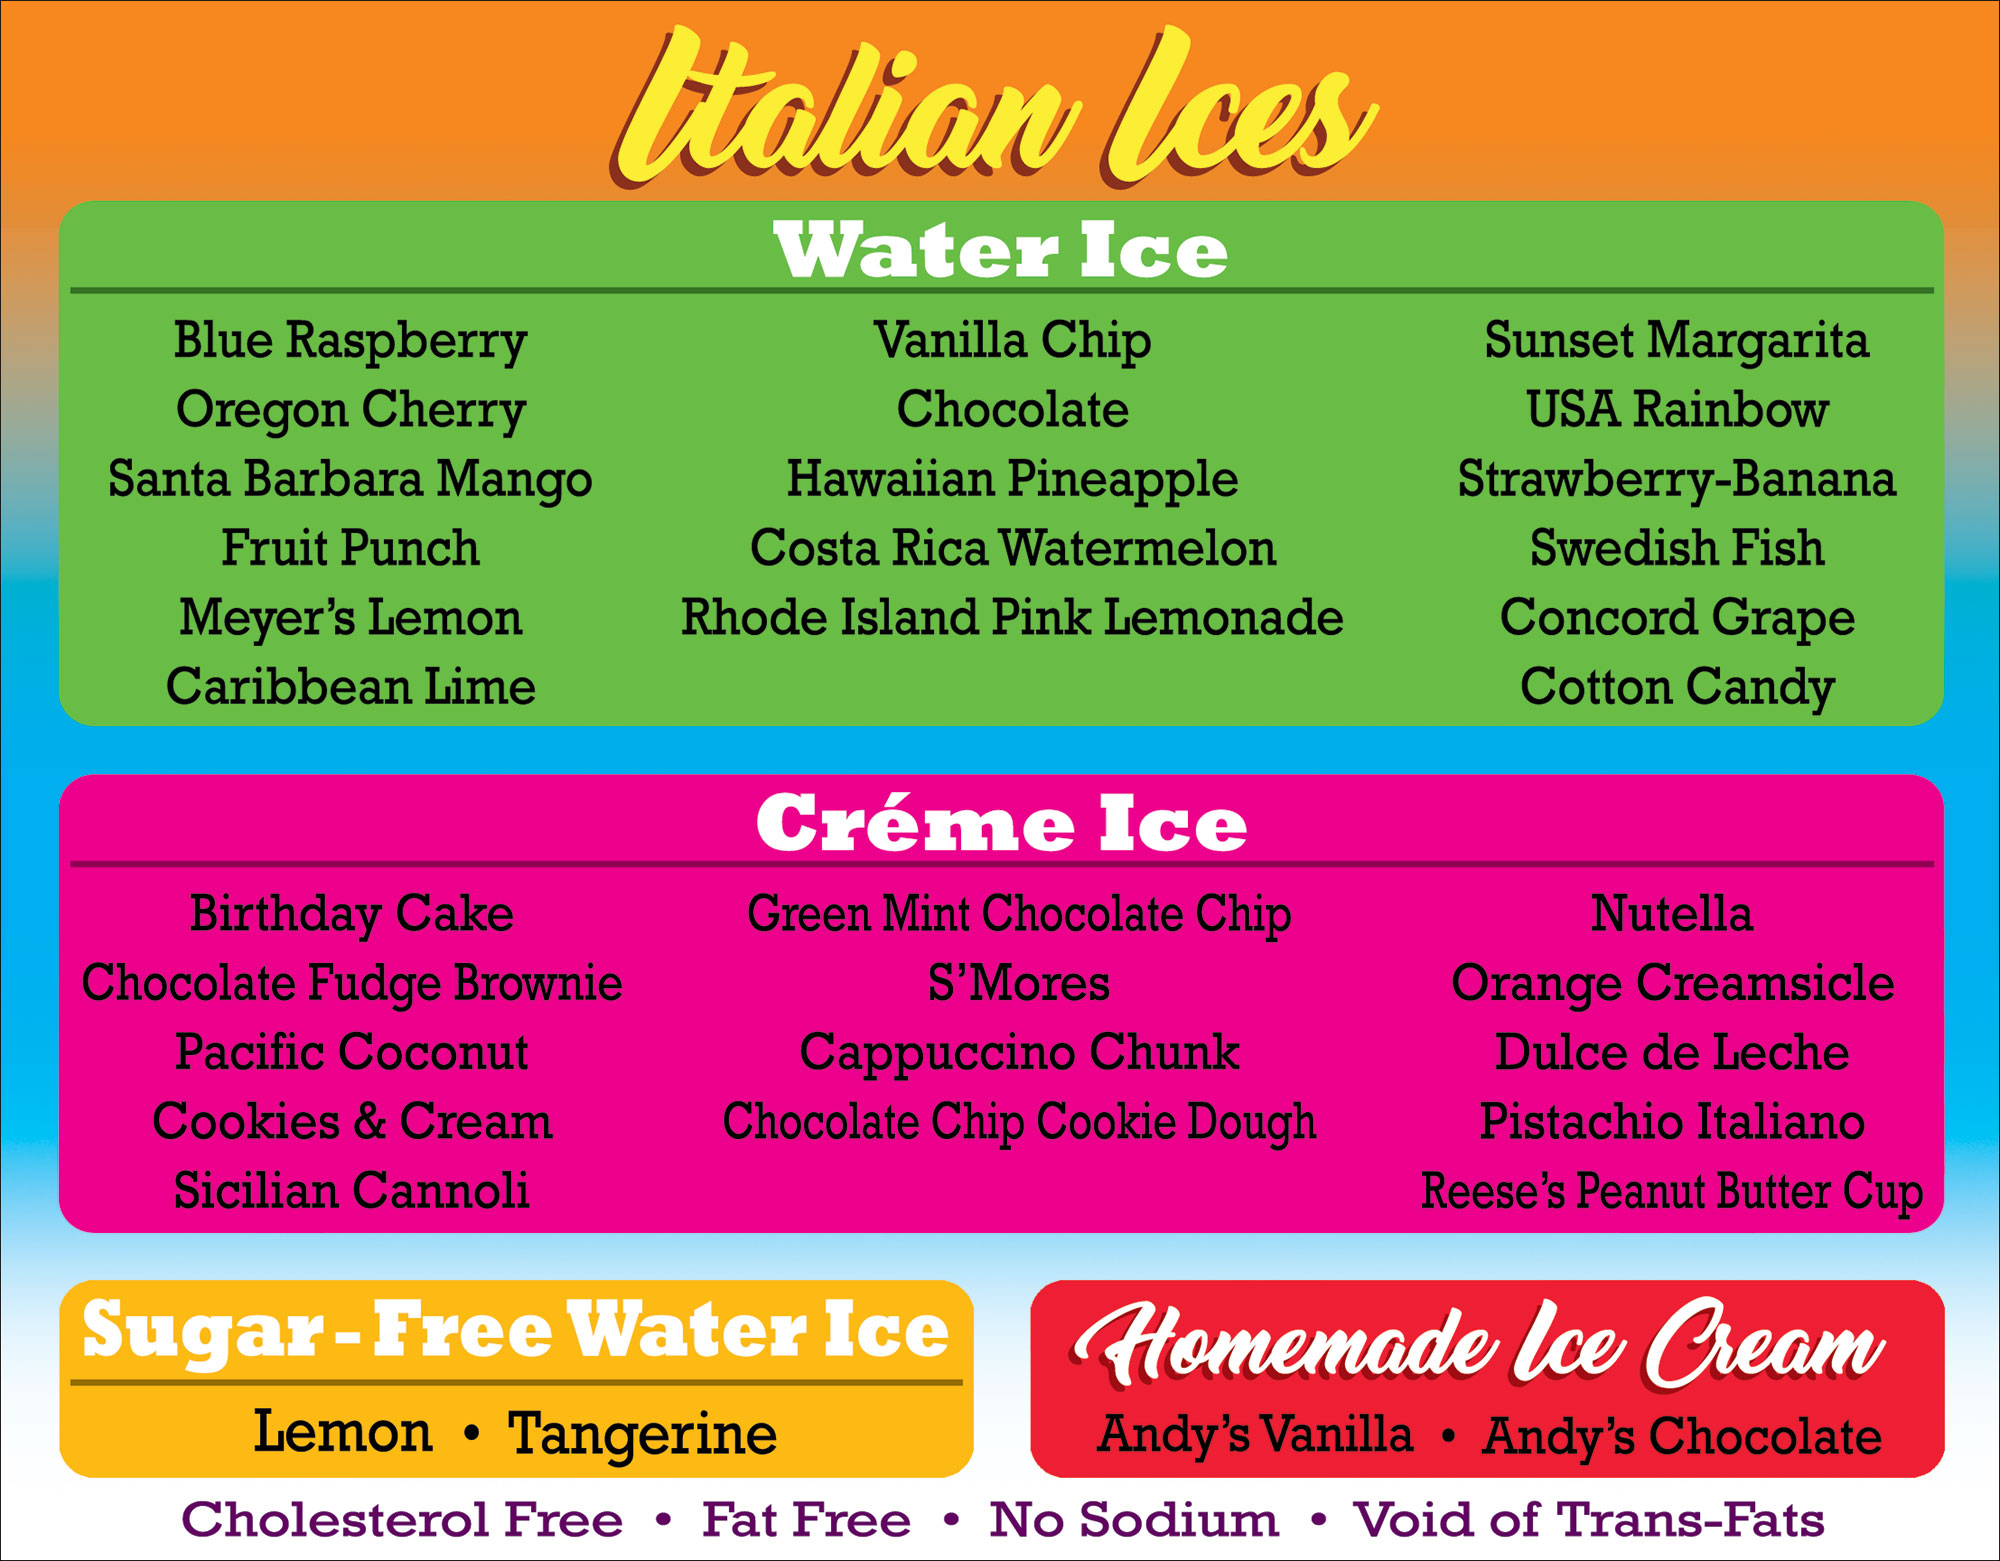 Italian Ices menu